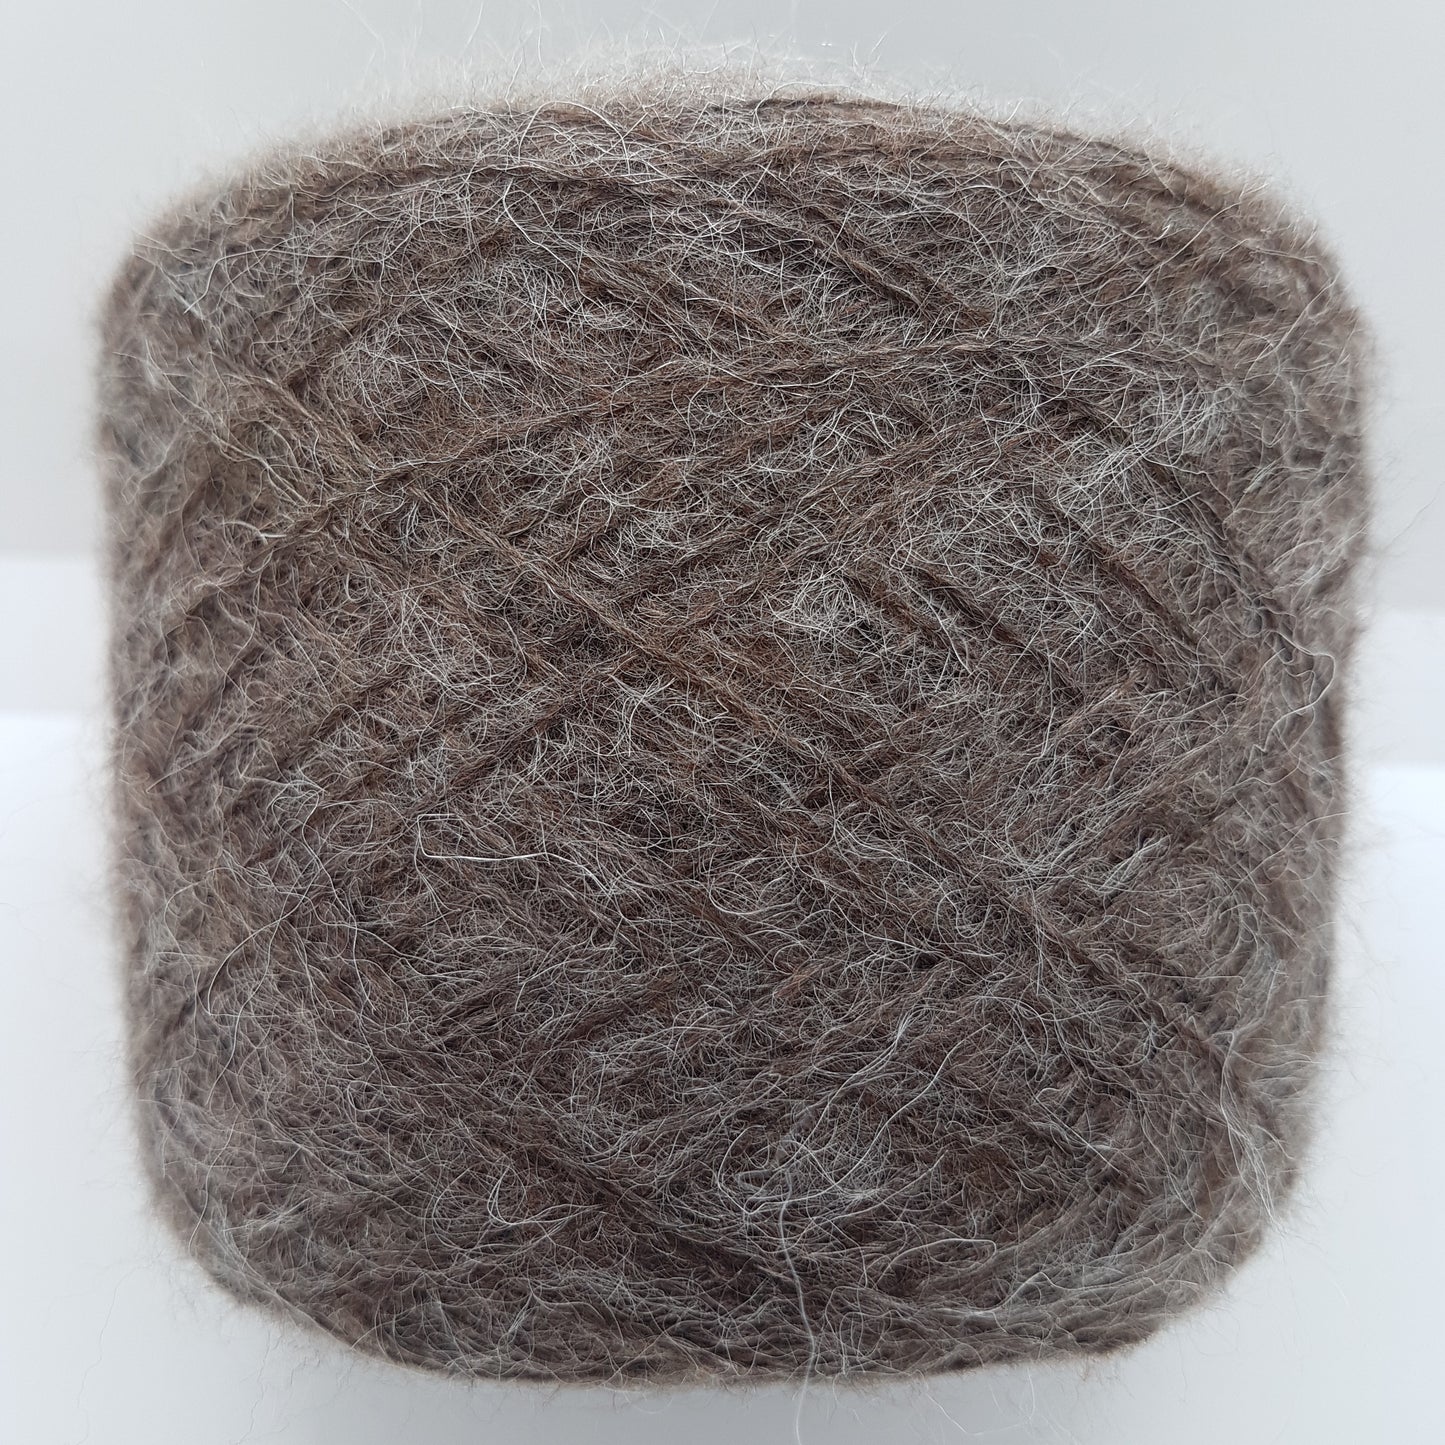 100g Mohair Soft Italian yarn Italian color taupe Tortora brown gray N.215